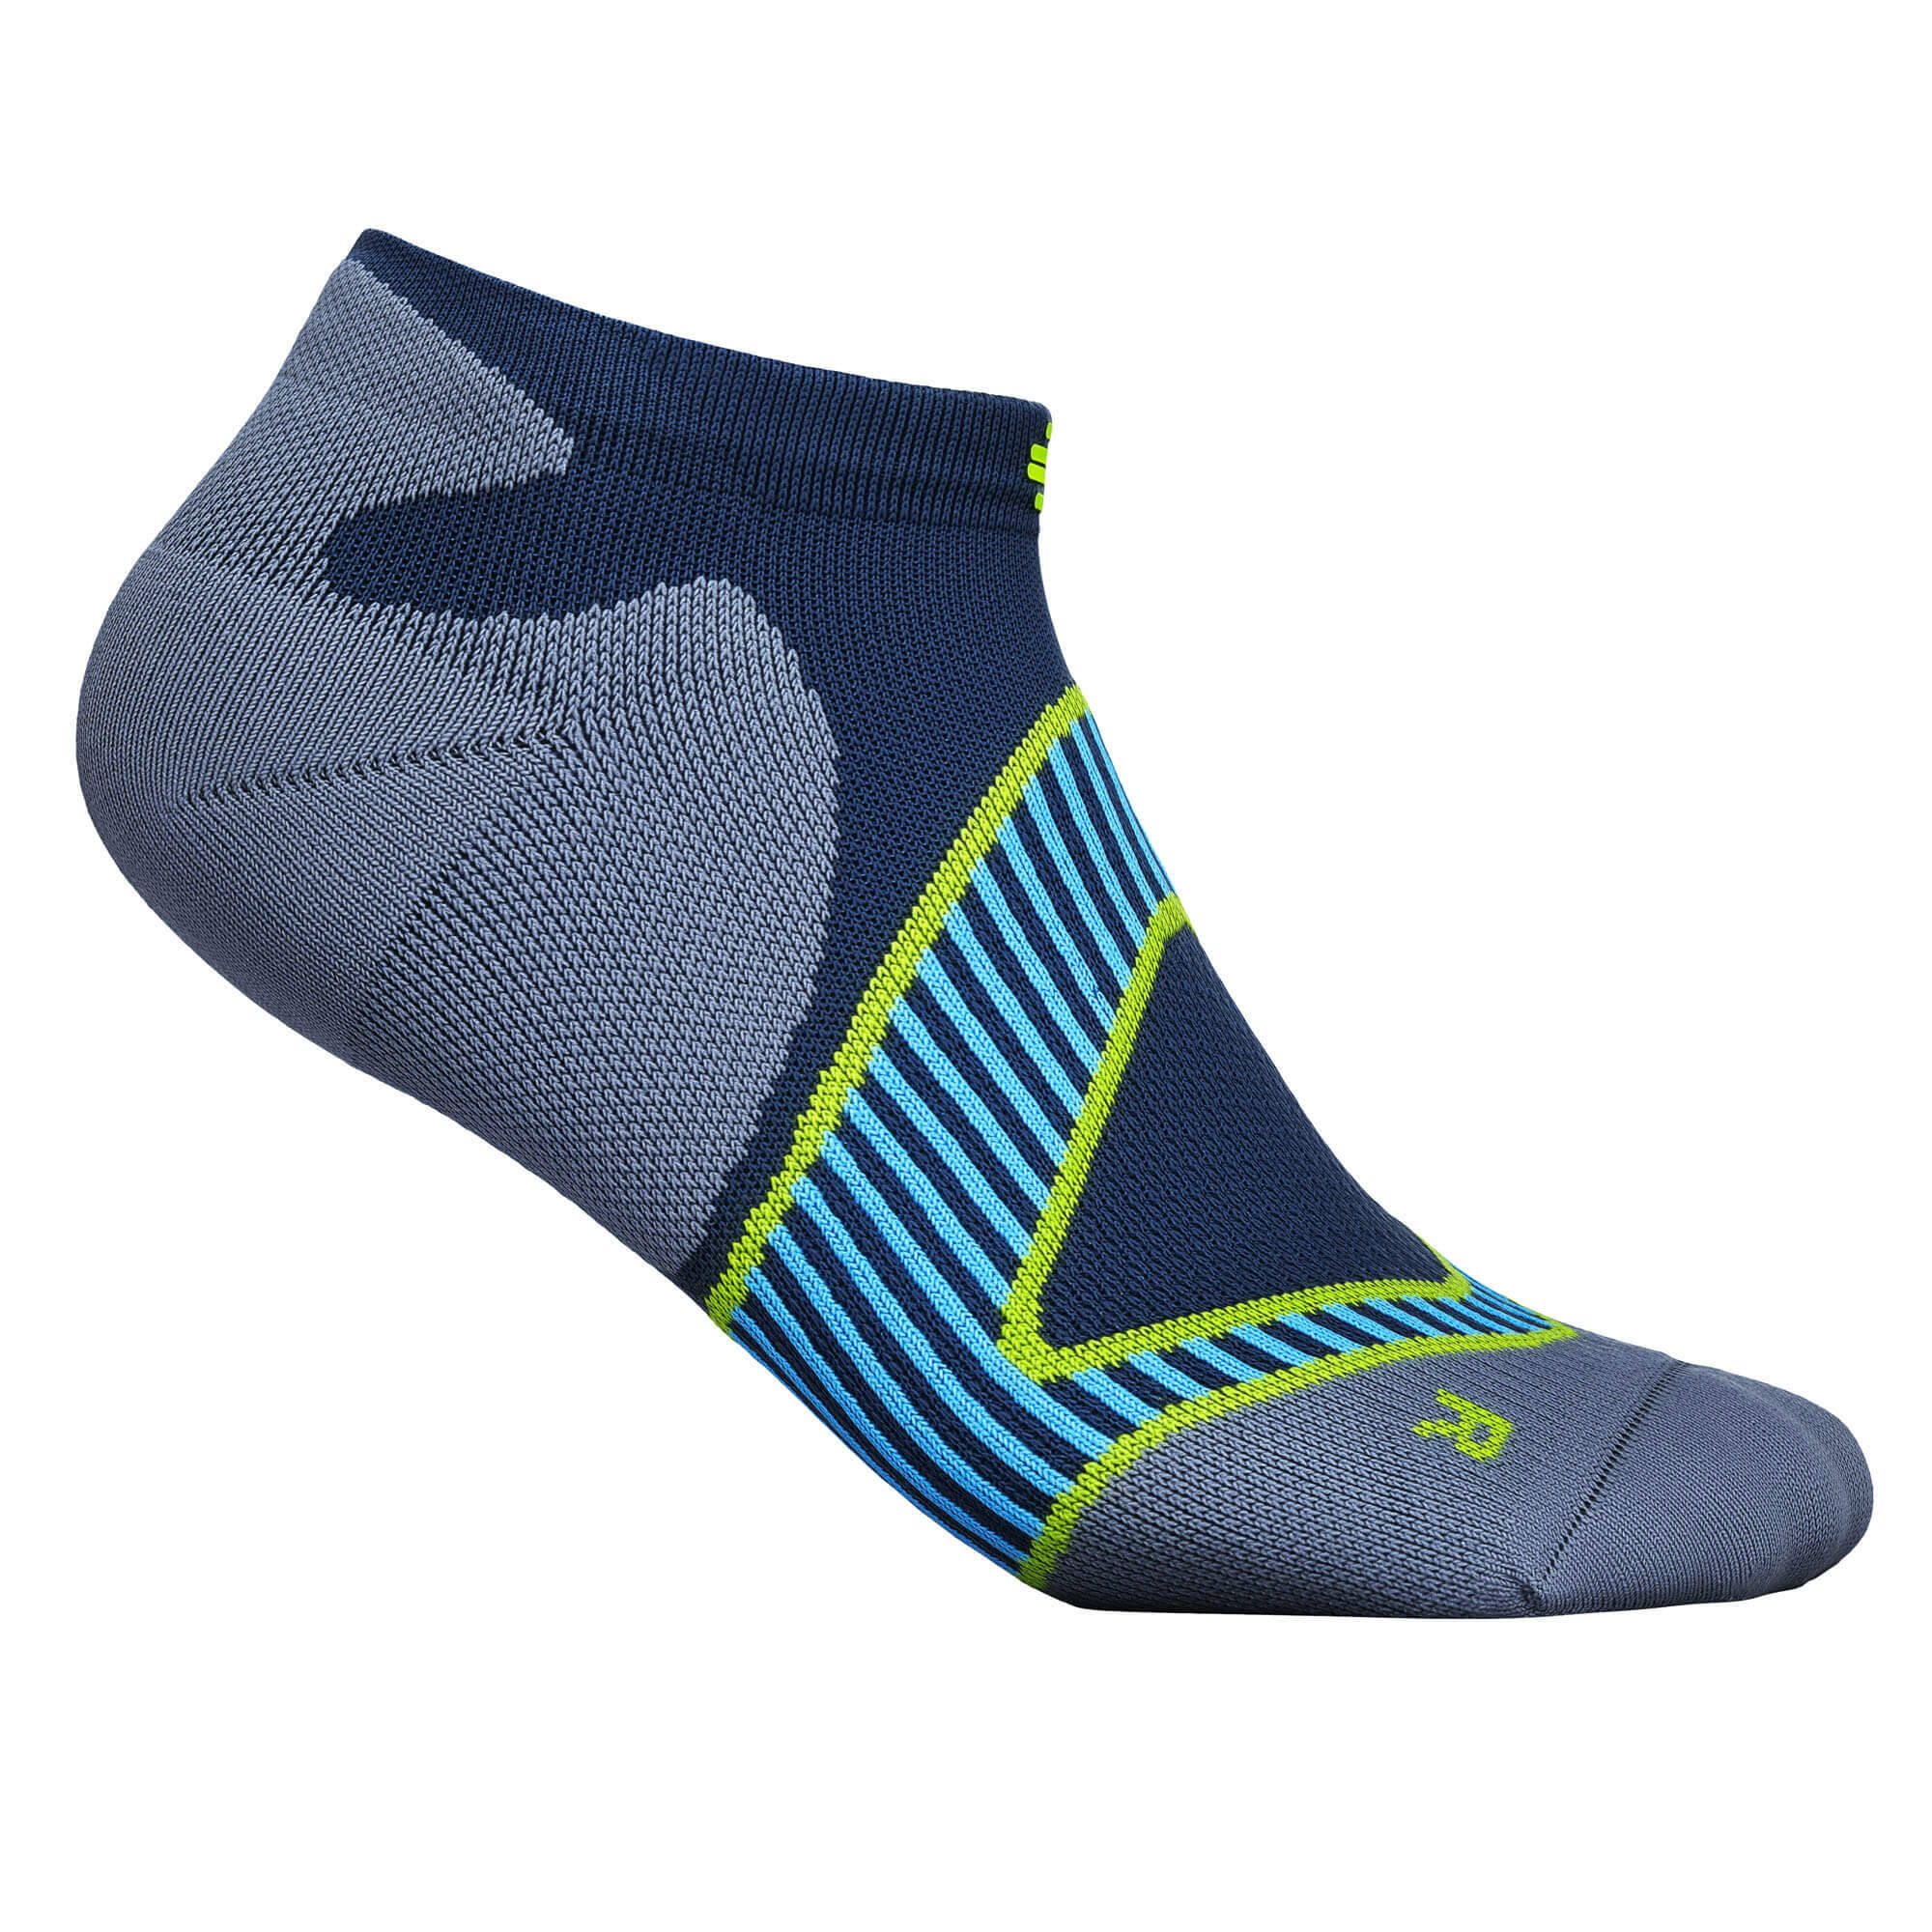 Run Performance Compression Socks, Sports Compression Socks & Sleeves, Sports Products